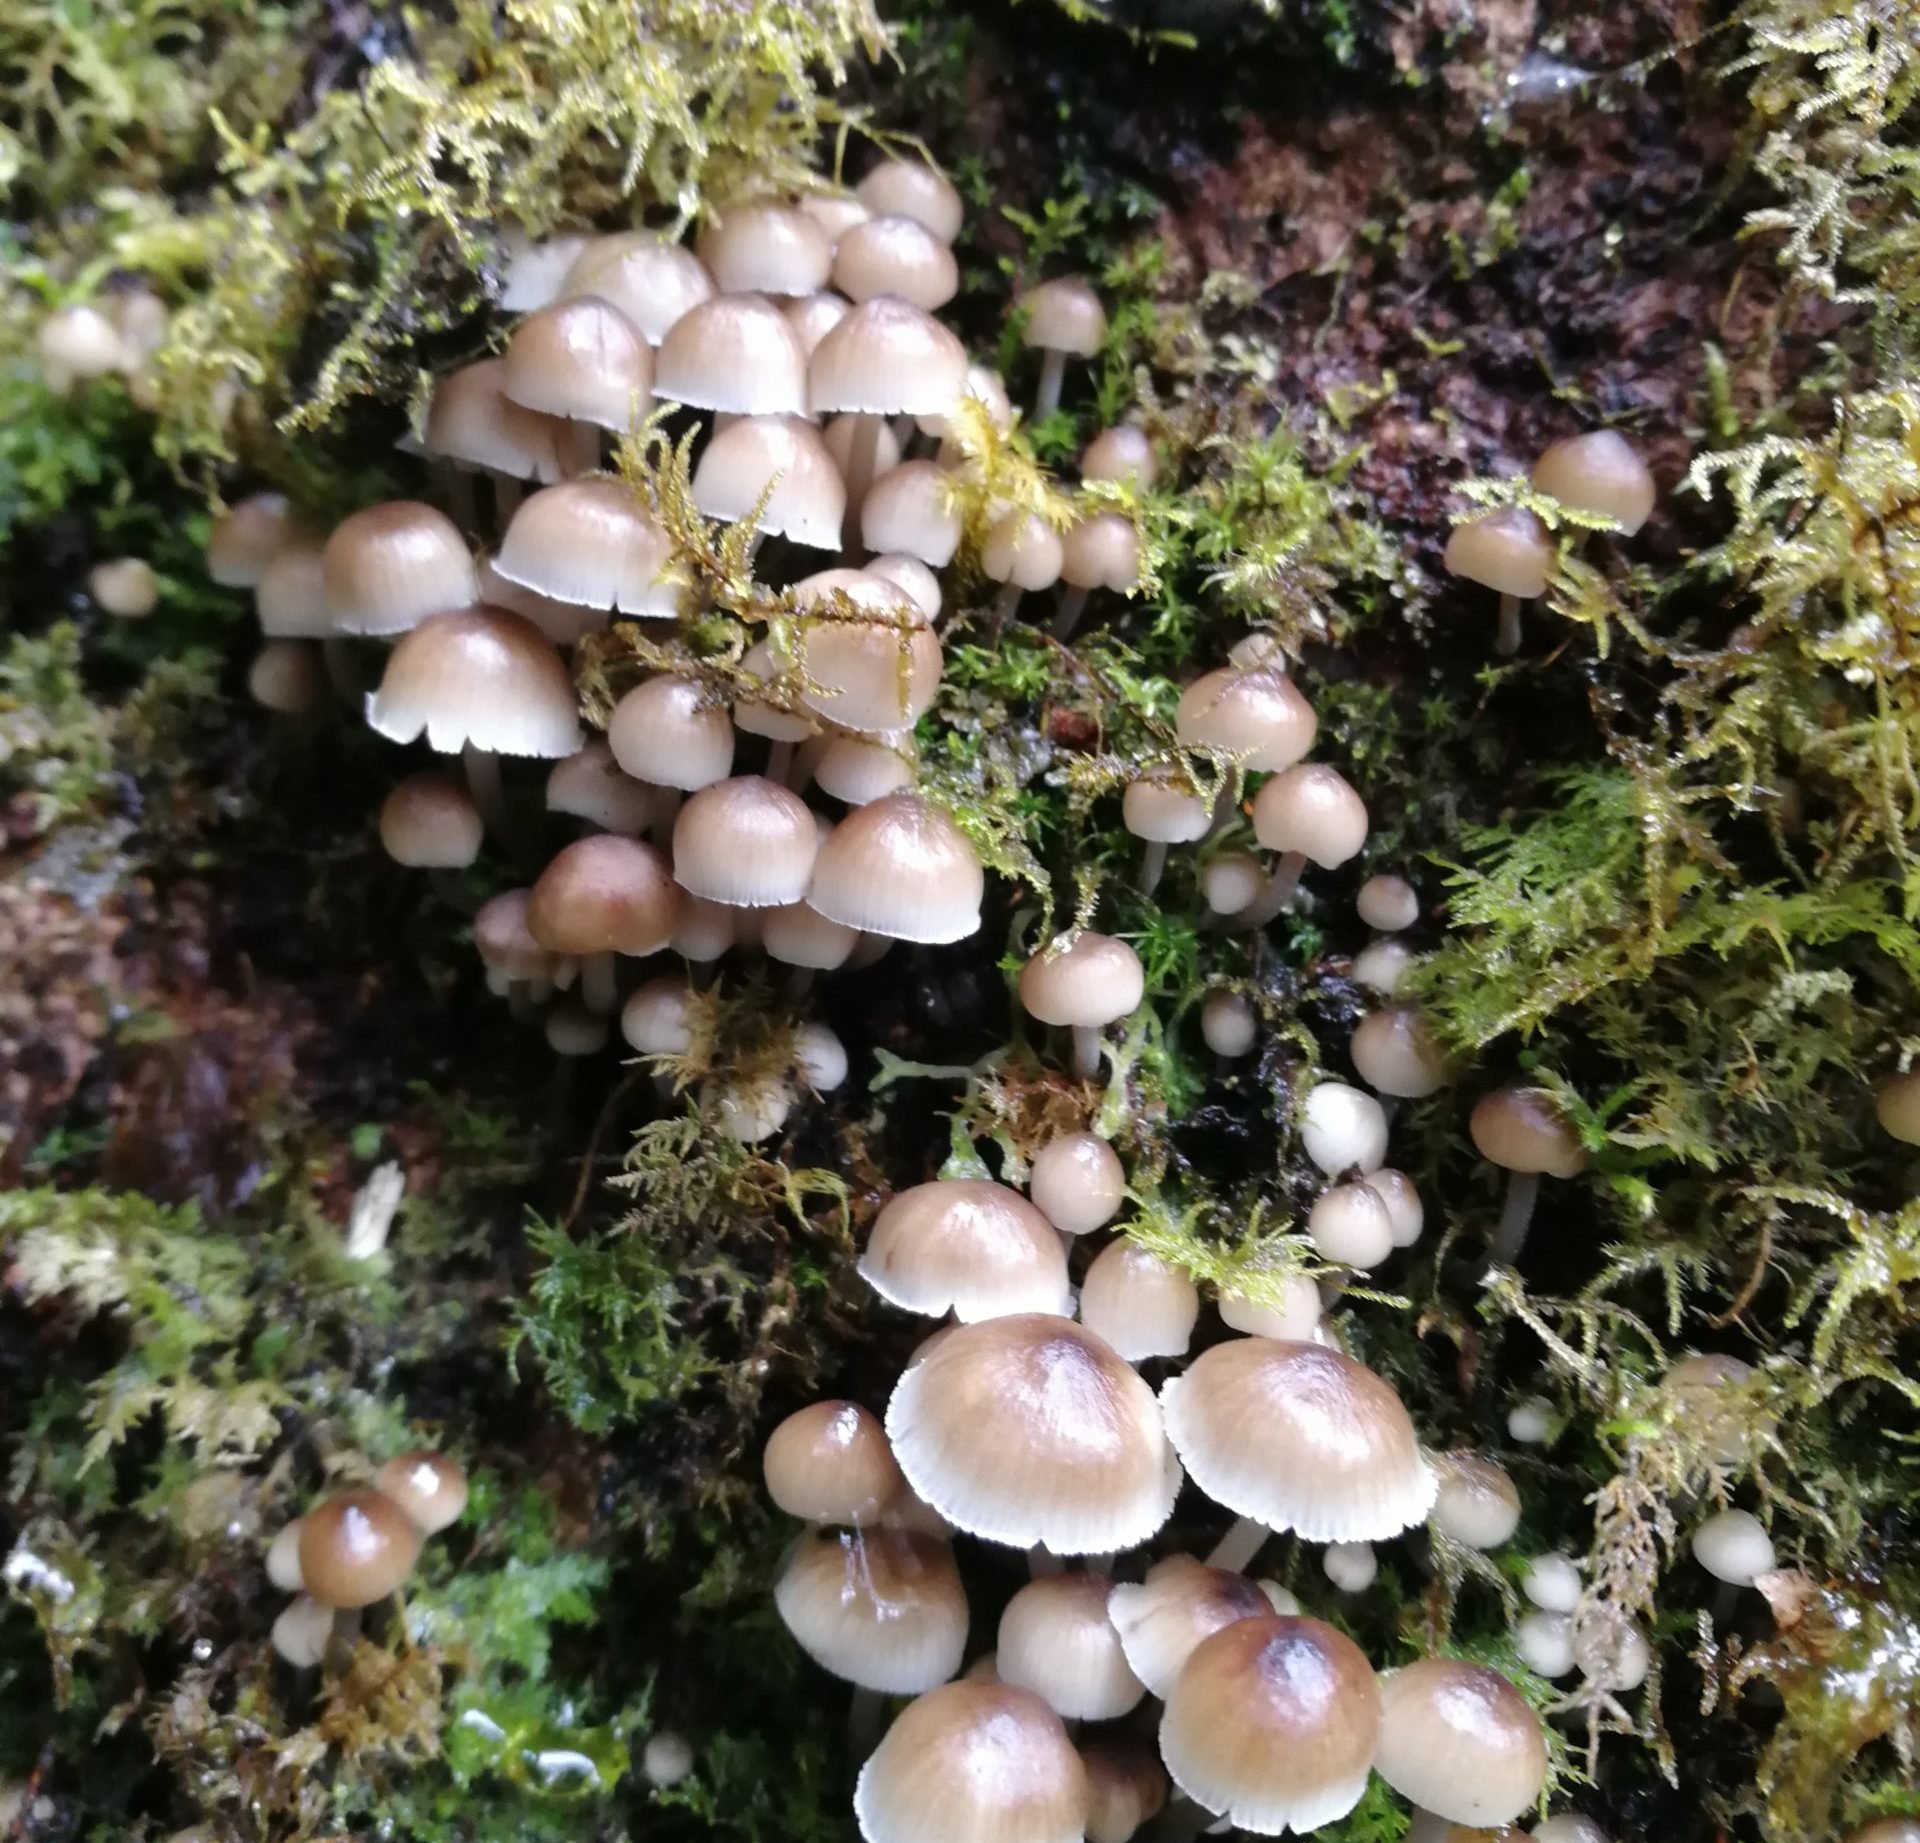 Fungi at Eaglenest (Image: Dombe Pradhan)